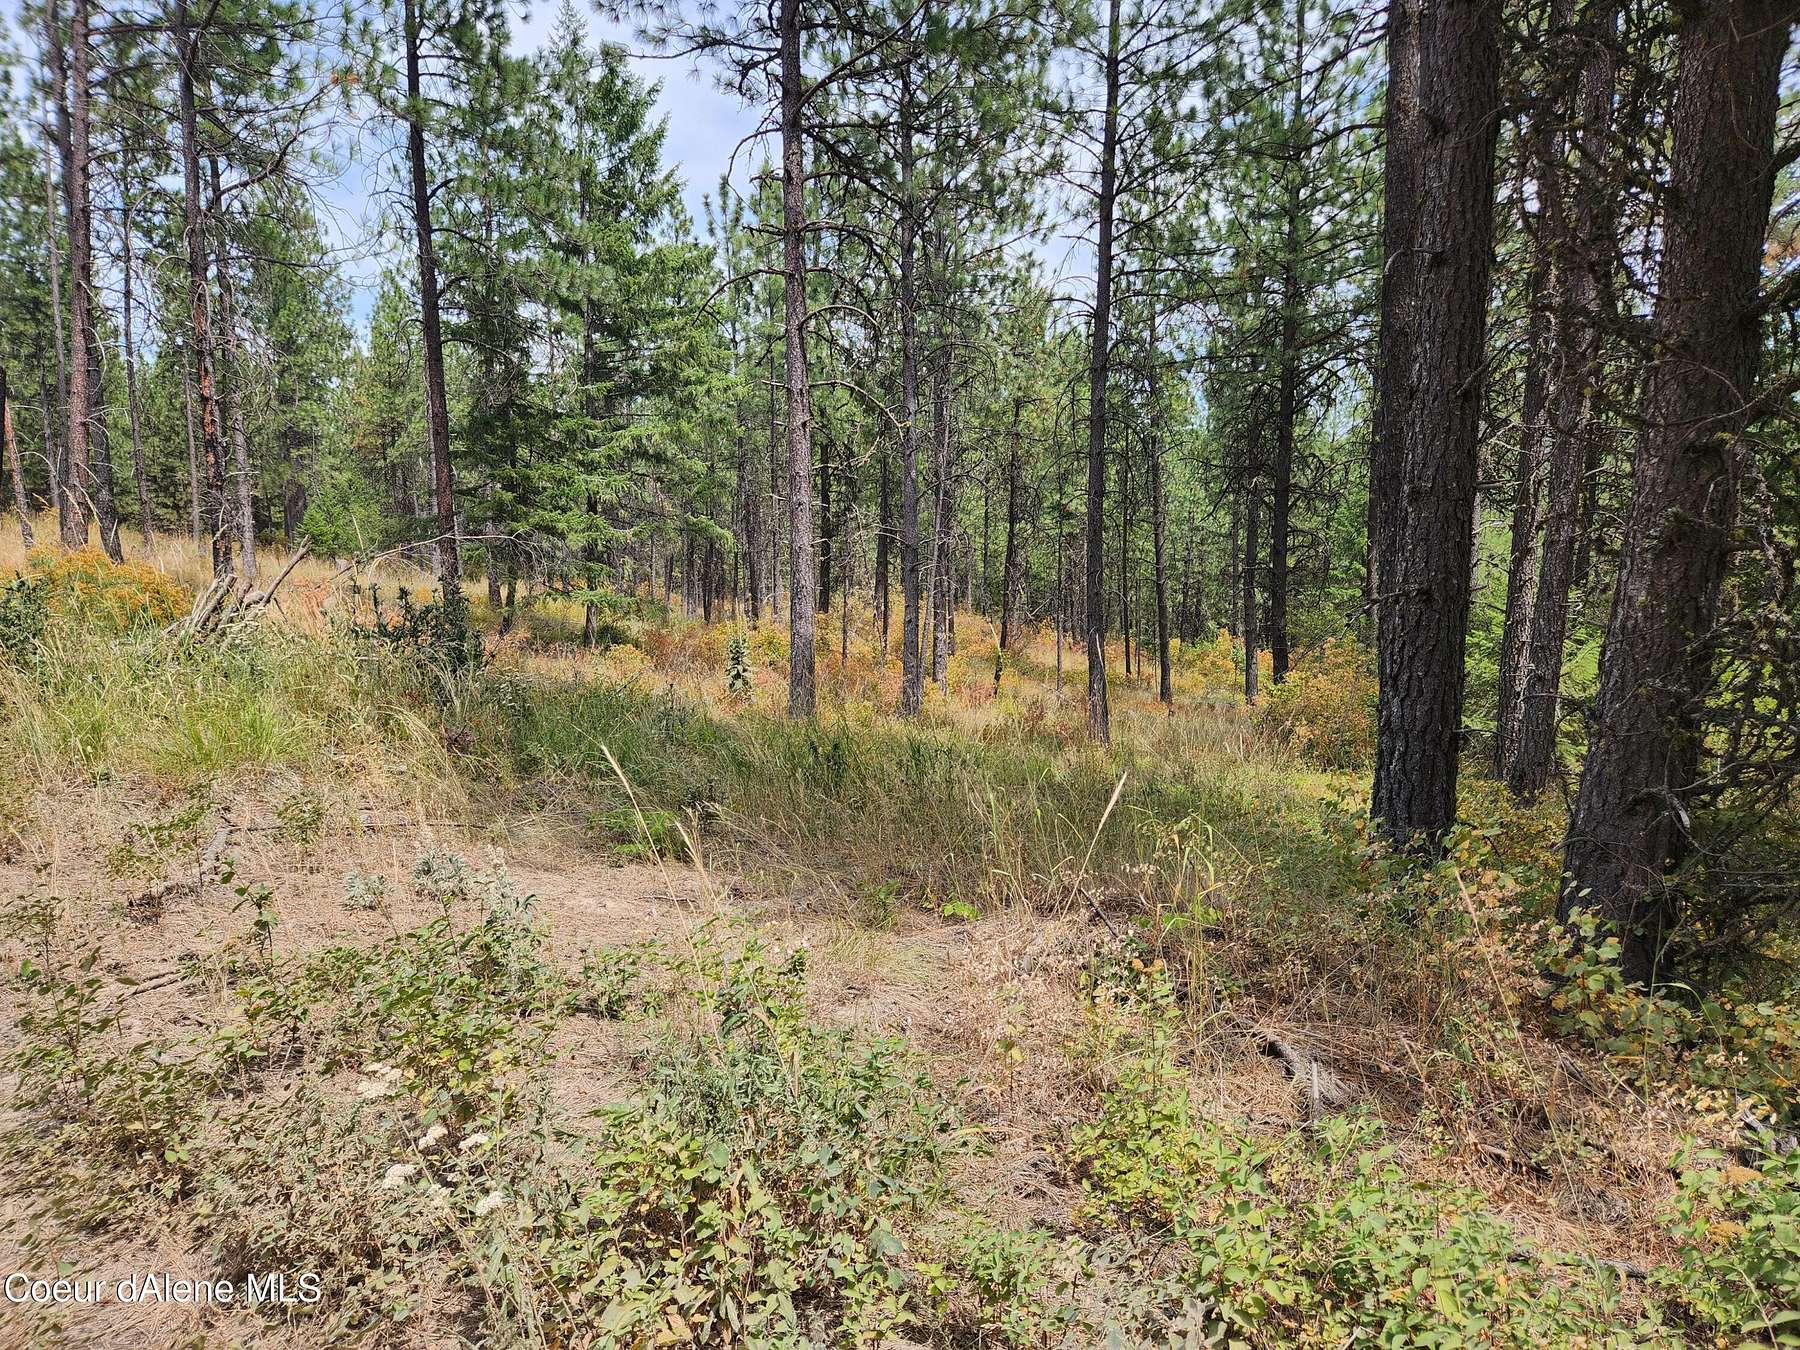 5 Acres of Land for Sale in De Smet, Idaho